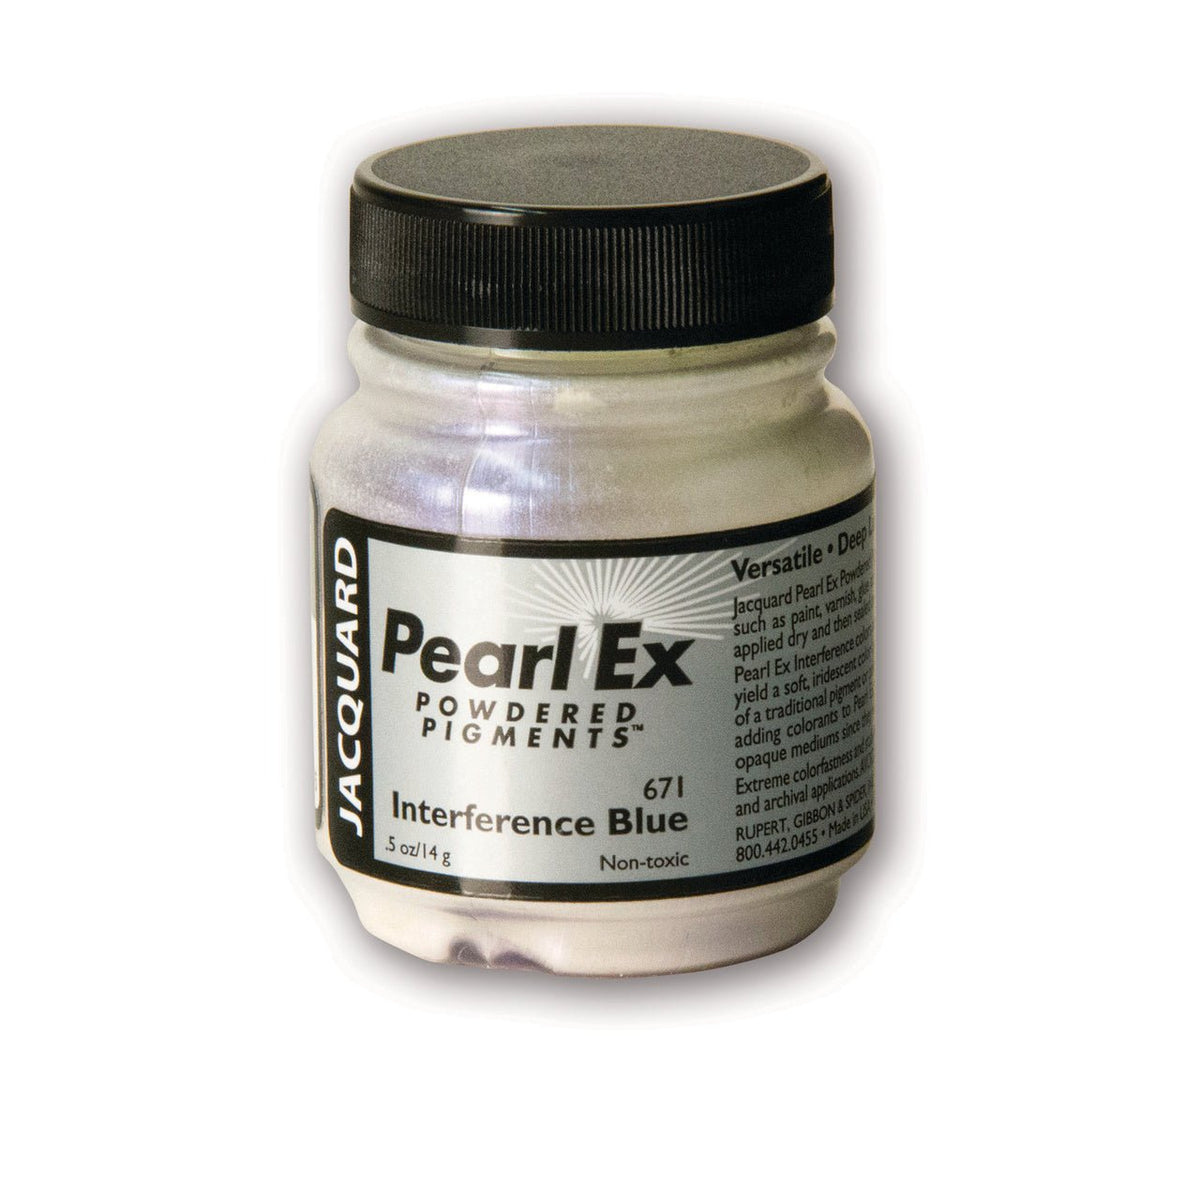 Jacquard Pearl-Ex Powdered Pigment .5 Oz Interference Blue - merriartist.com